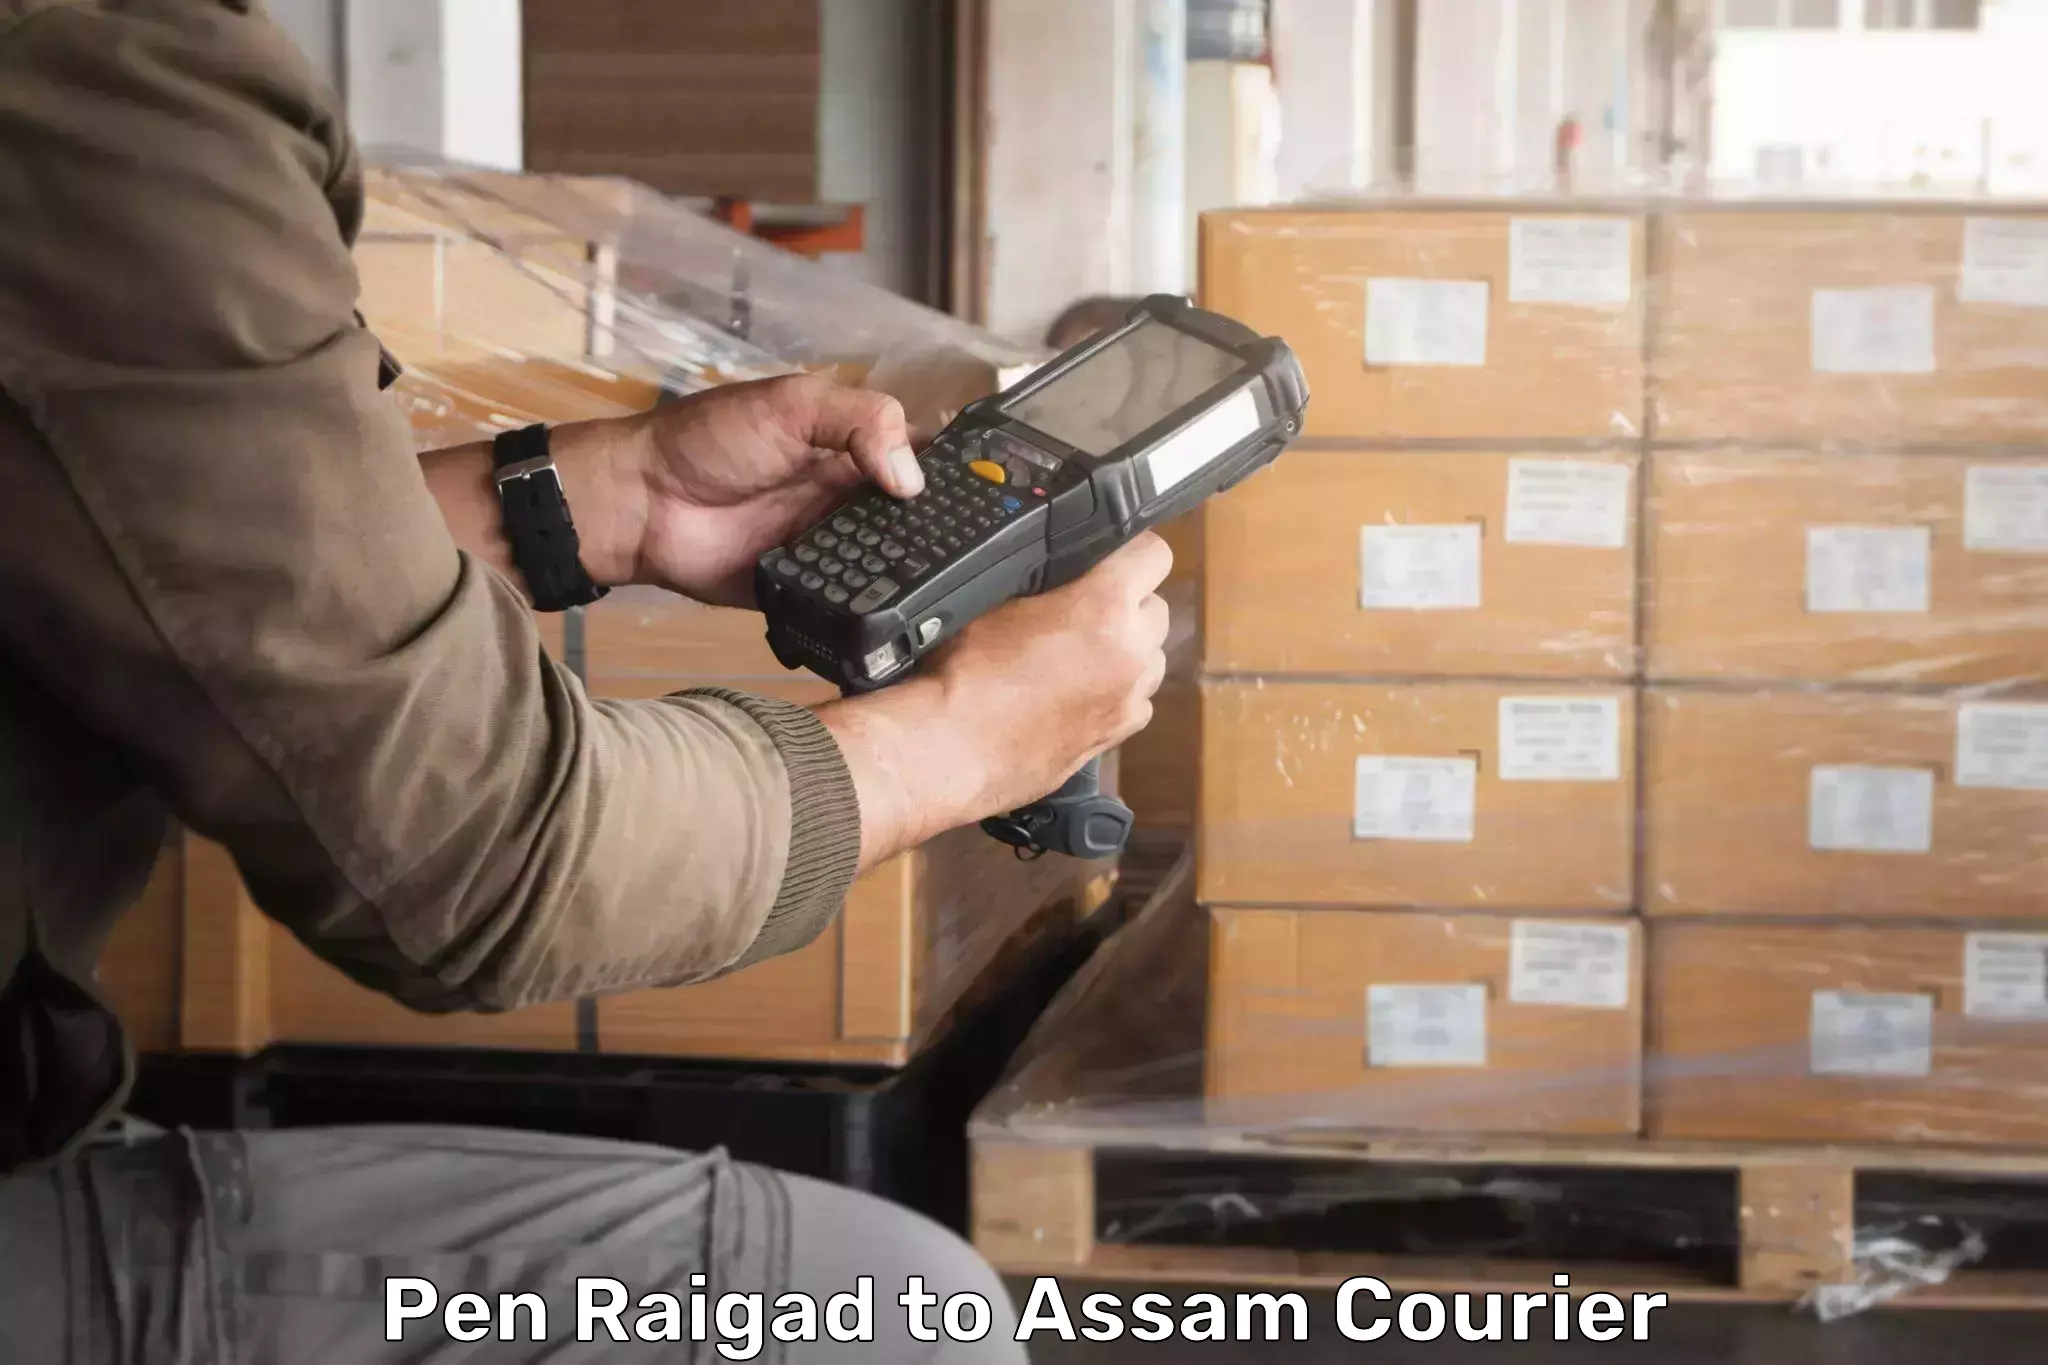 Smart logistics strategies Pen Raigad to Lala Assam